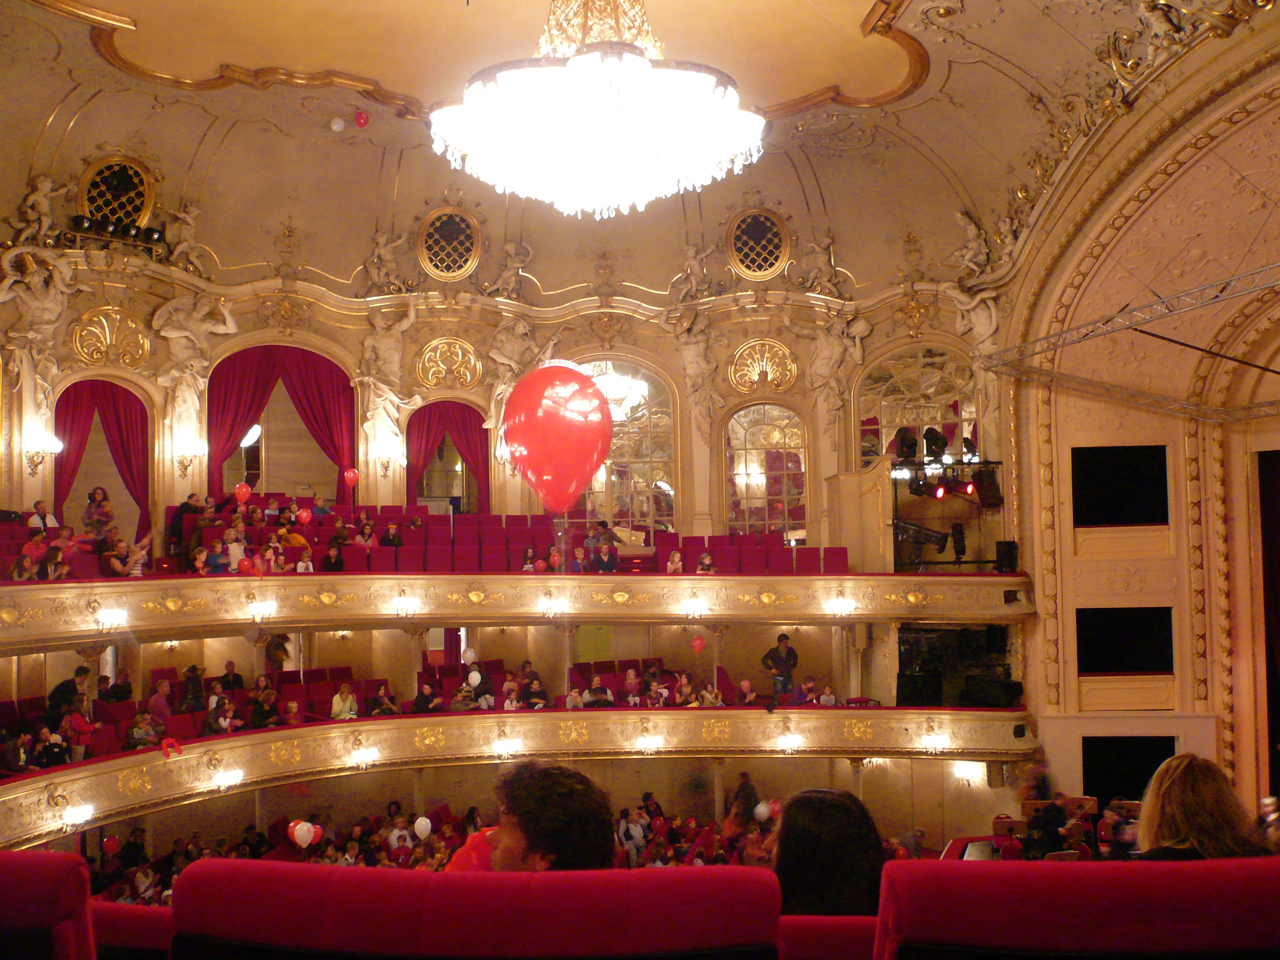 Опера берлин